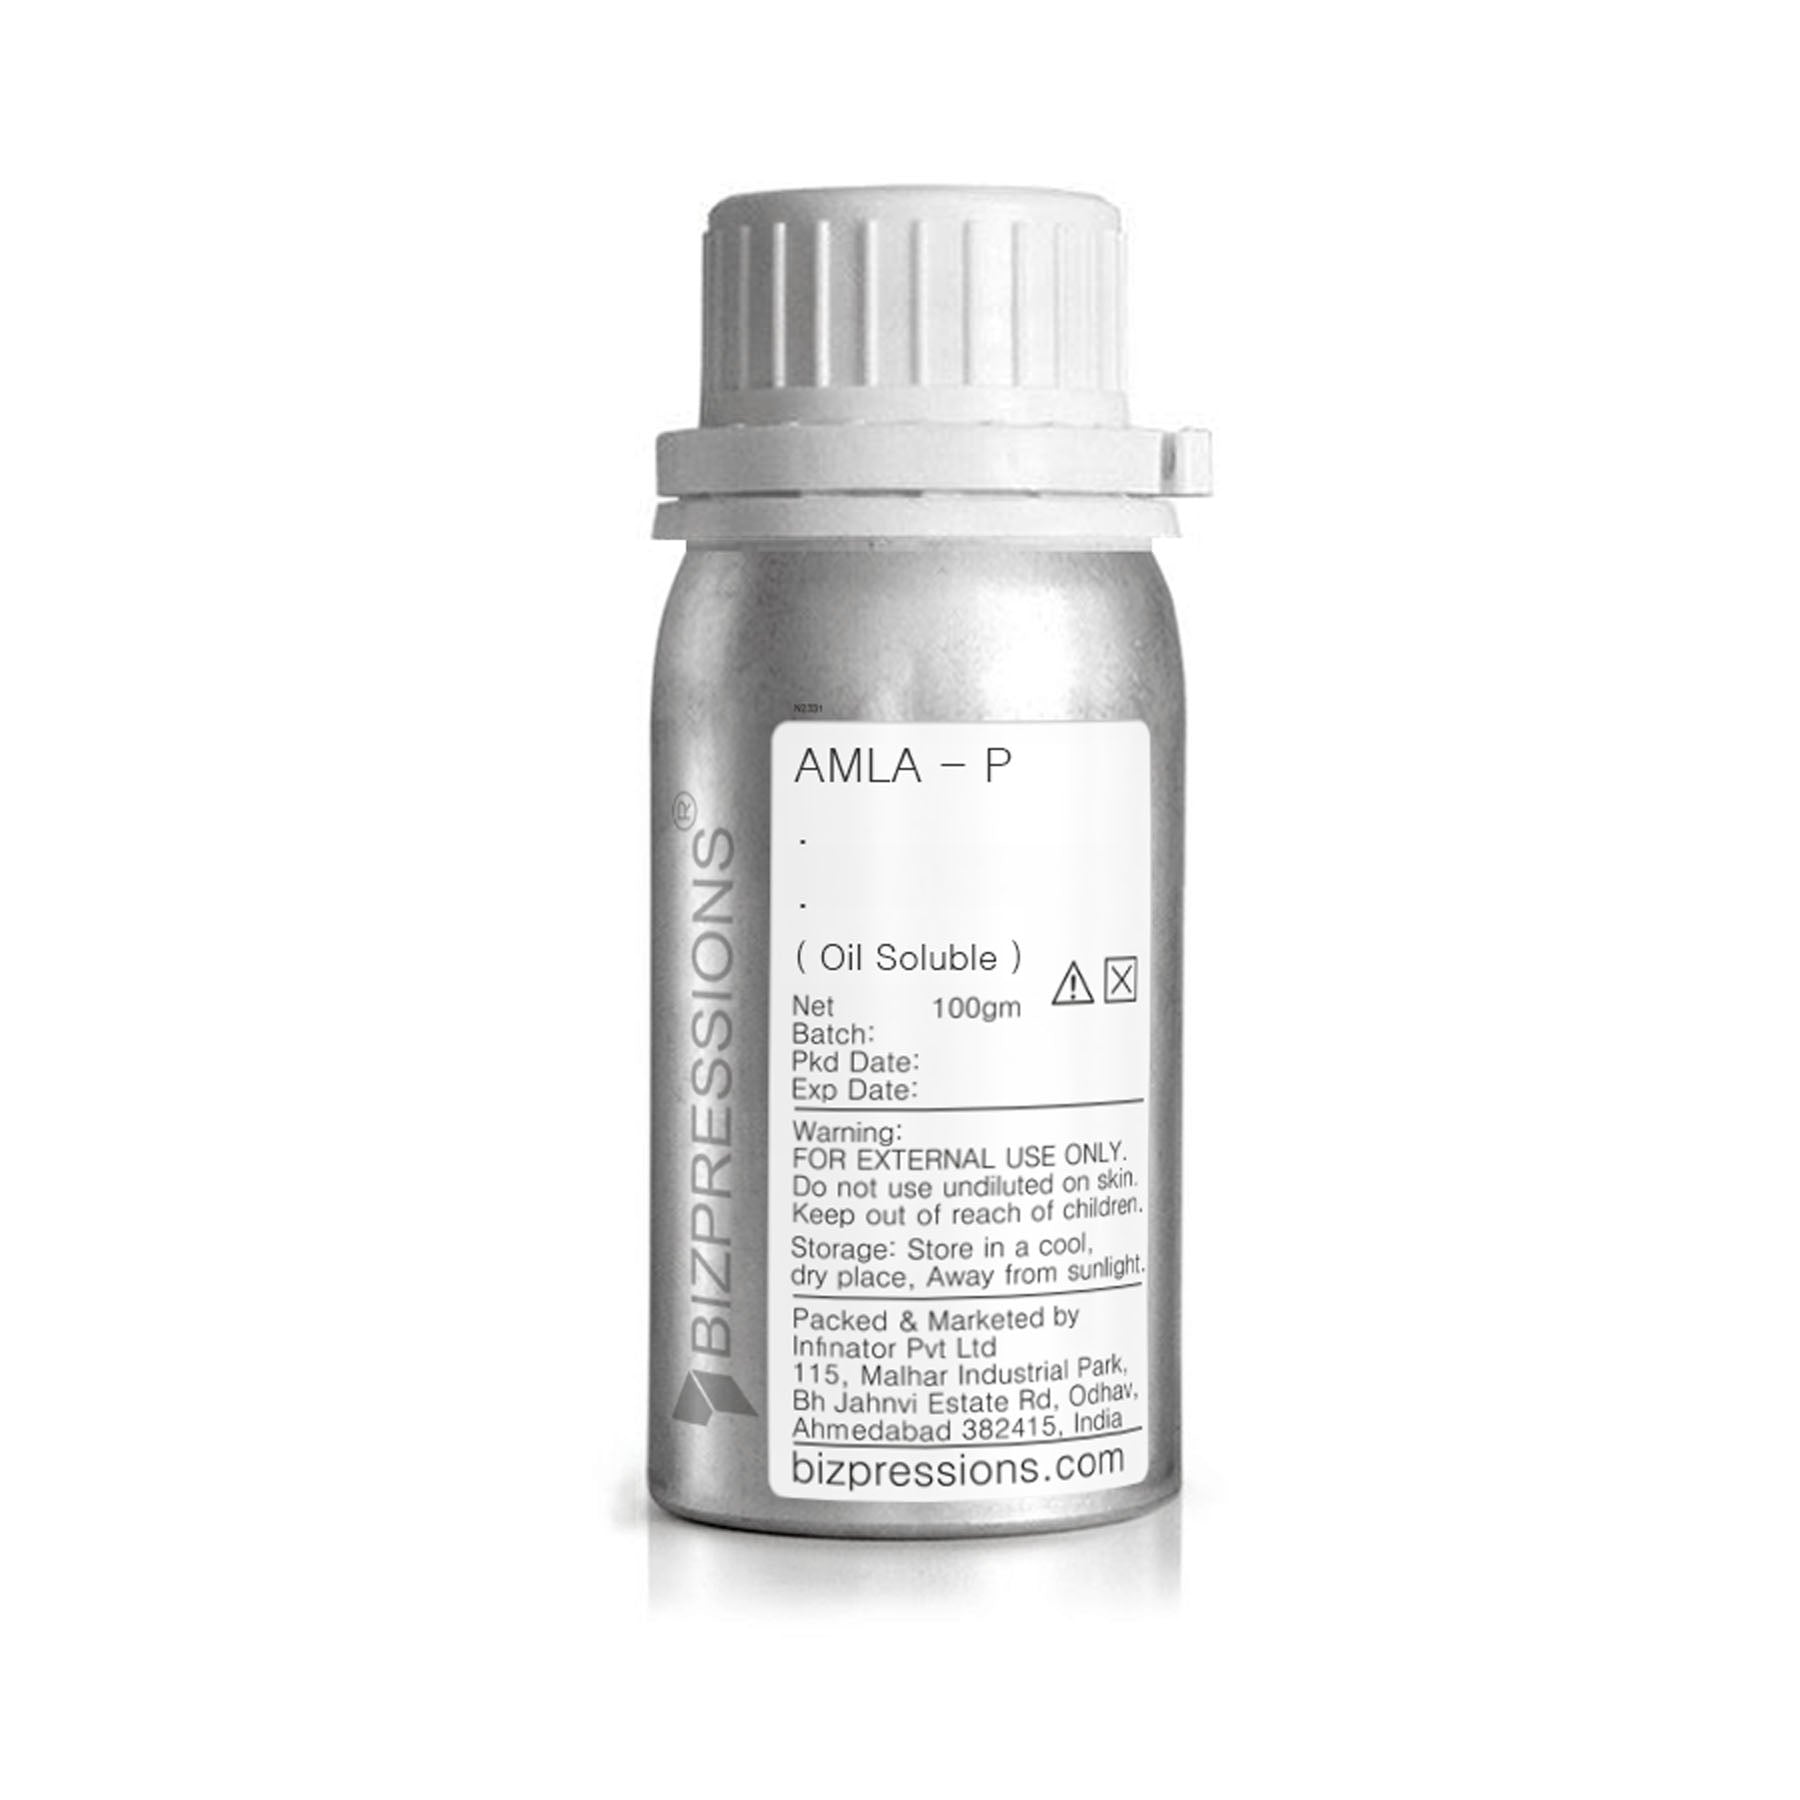 AMLA - P - Fragrance ( Oil Soluble ) - 100 gm